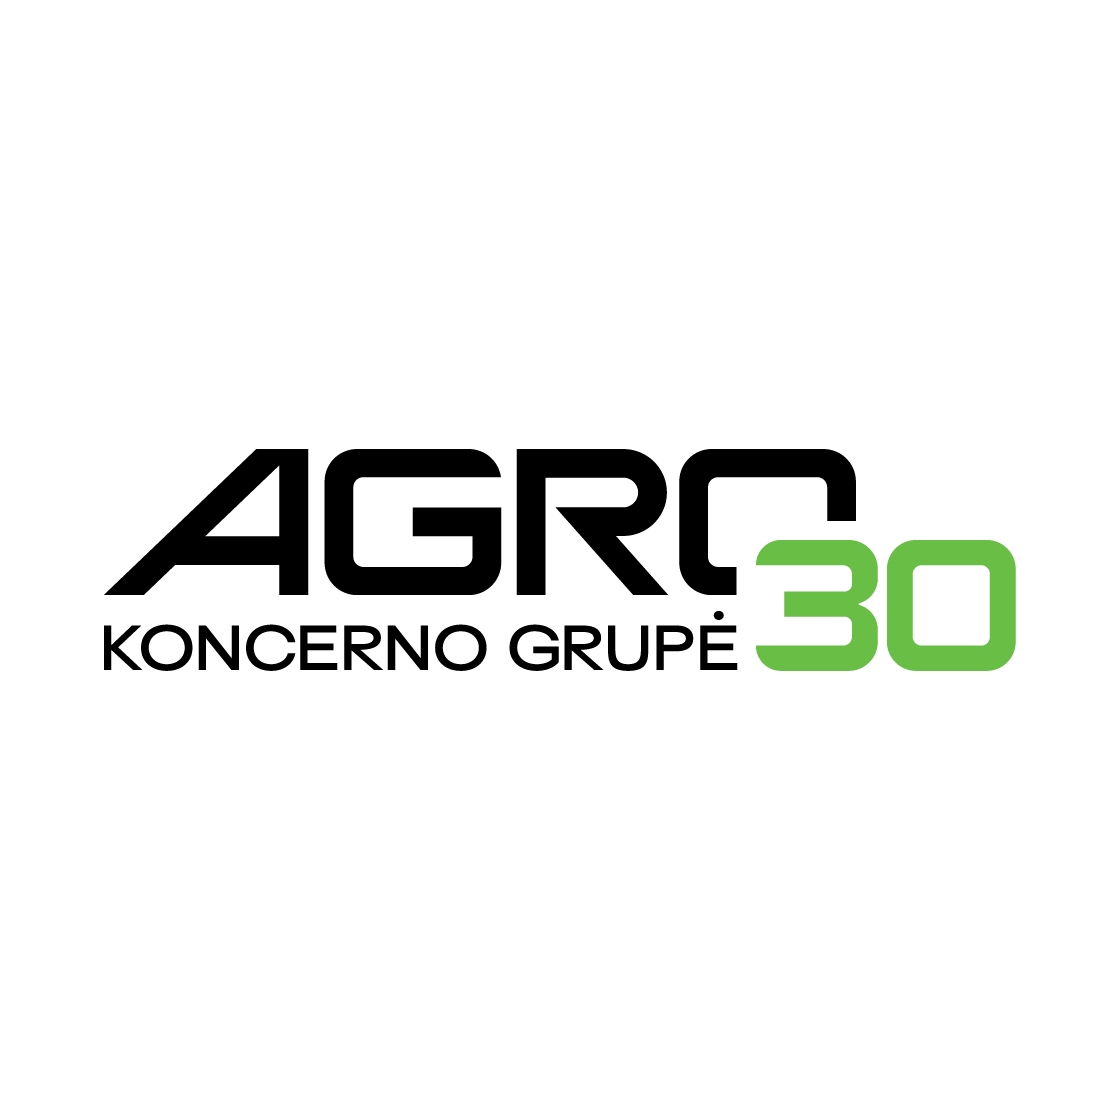 The Agrokoncernas Group